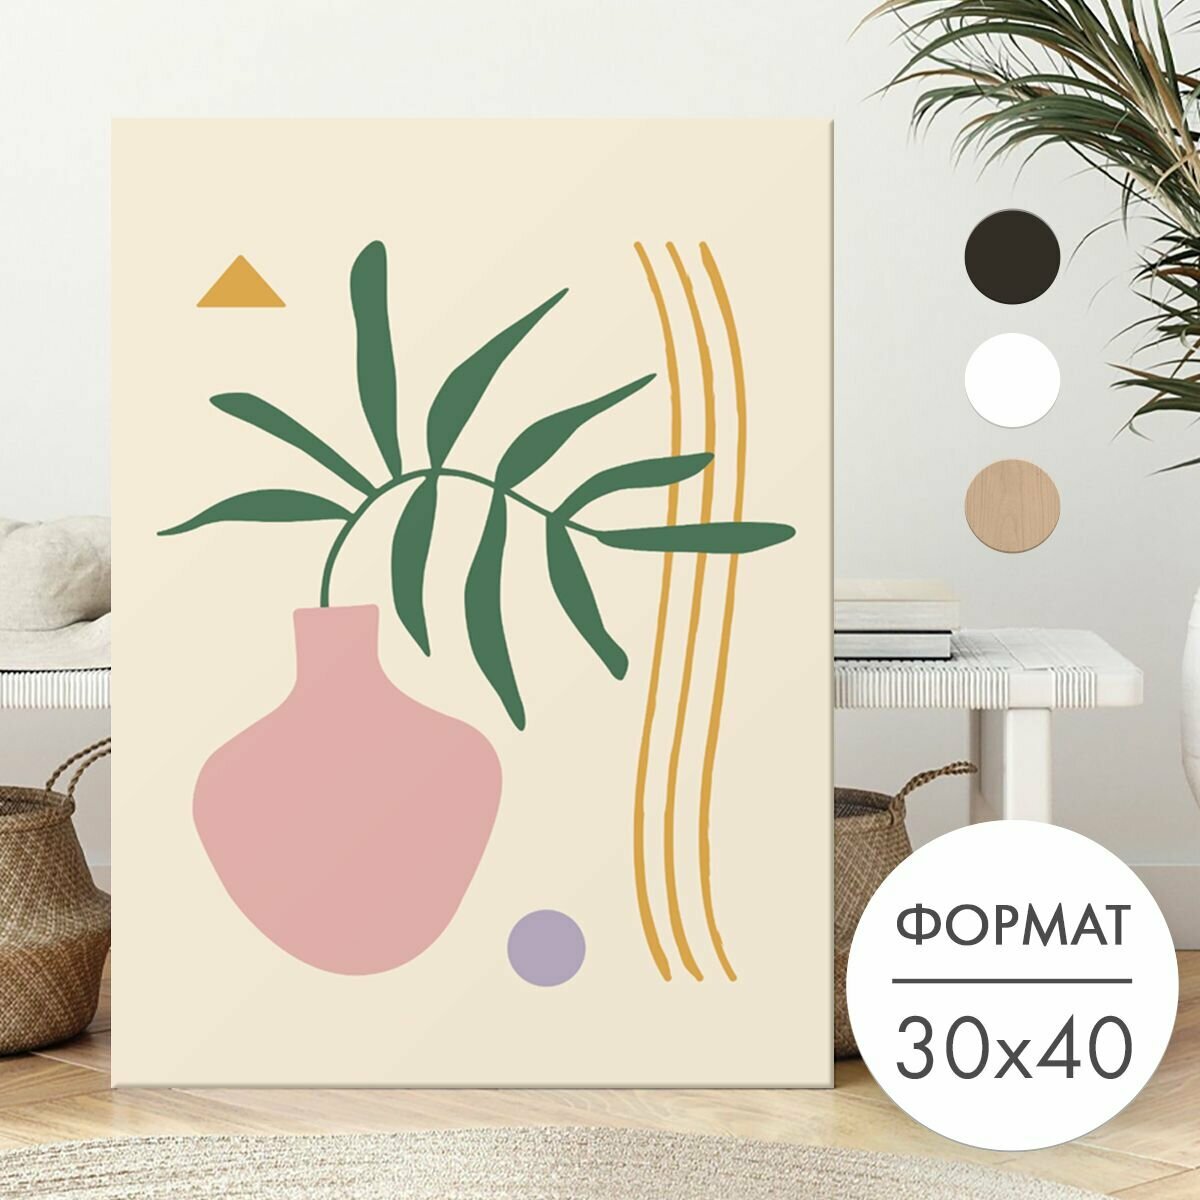 Постер 30х40 без рамки "Ваза и точки минимализм" для интерьера